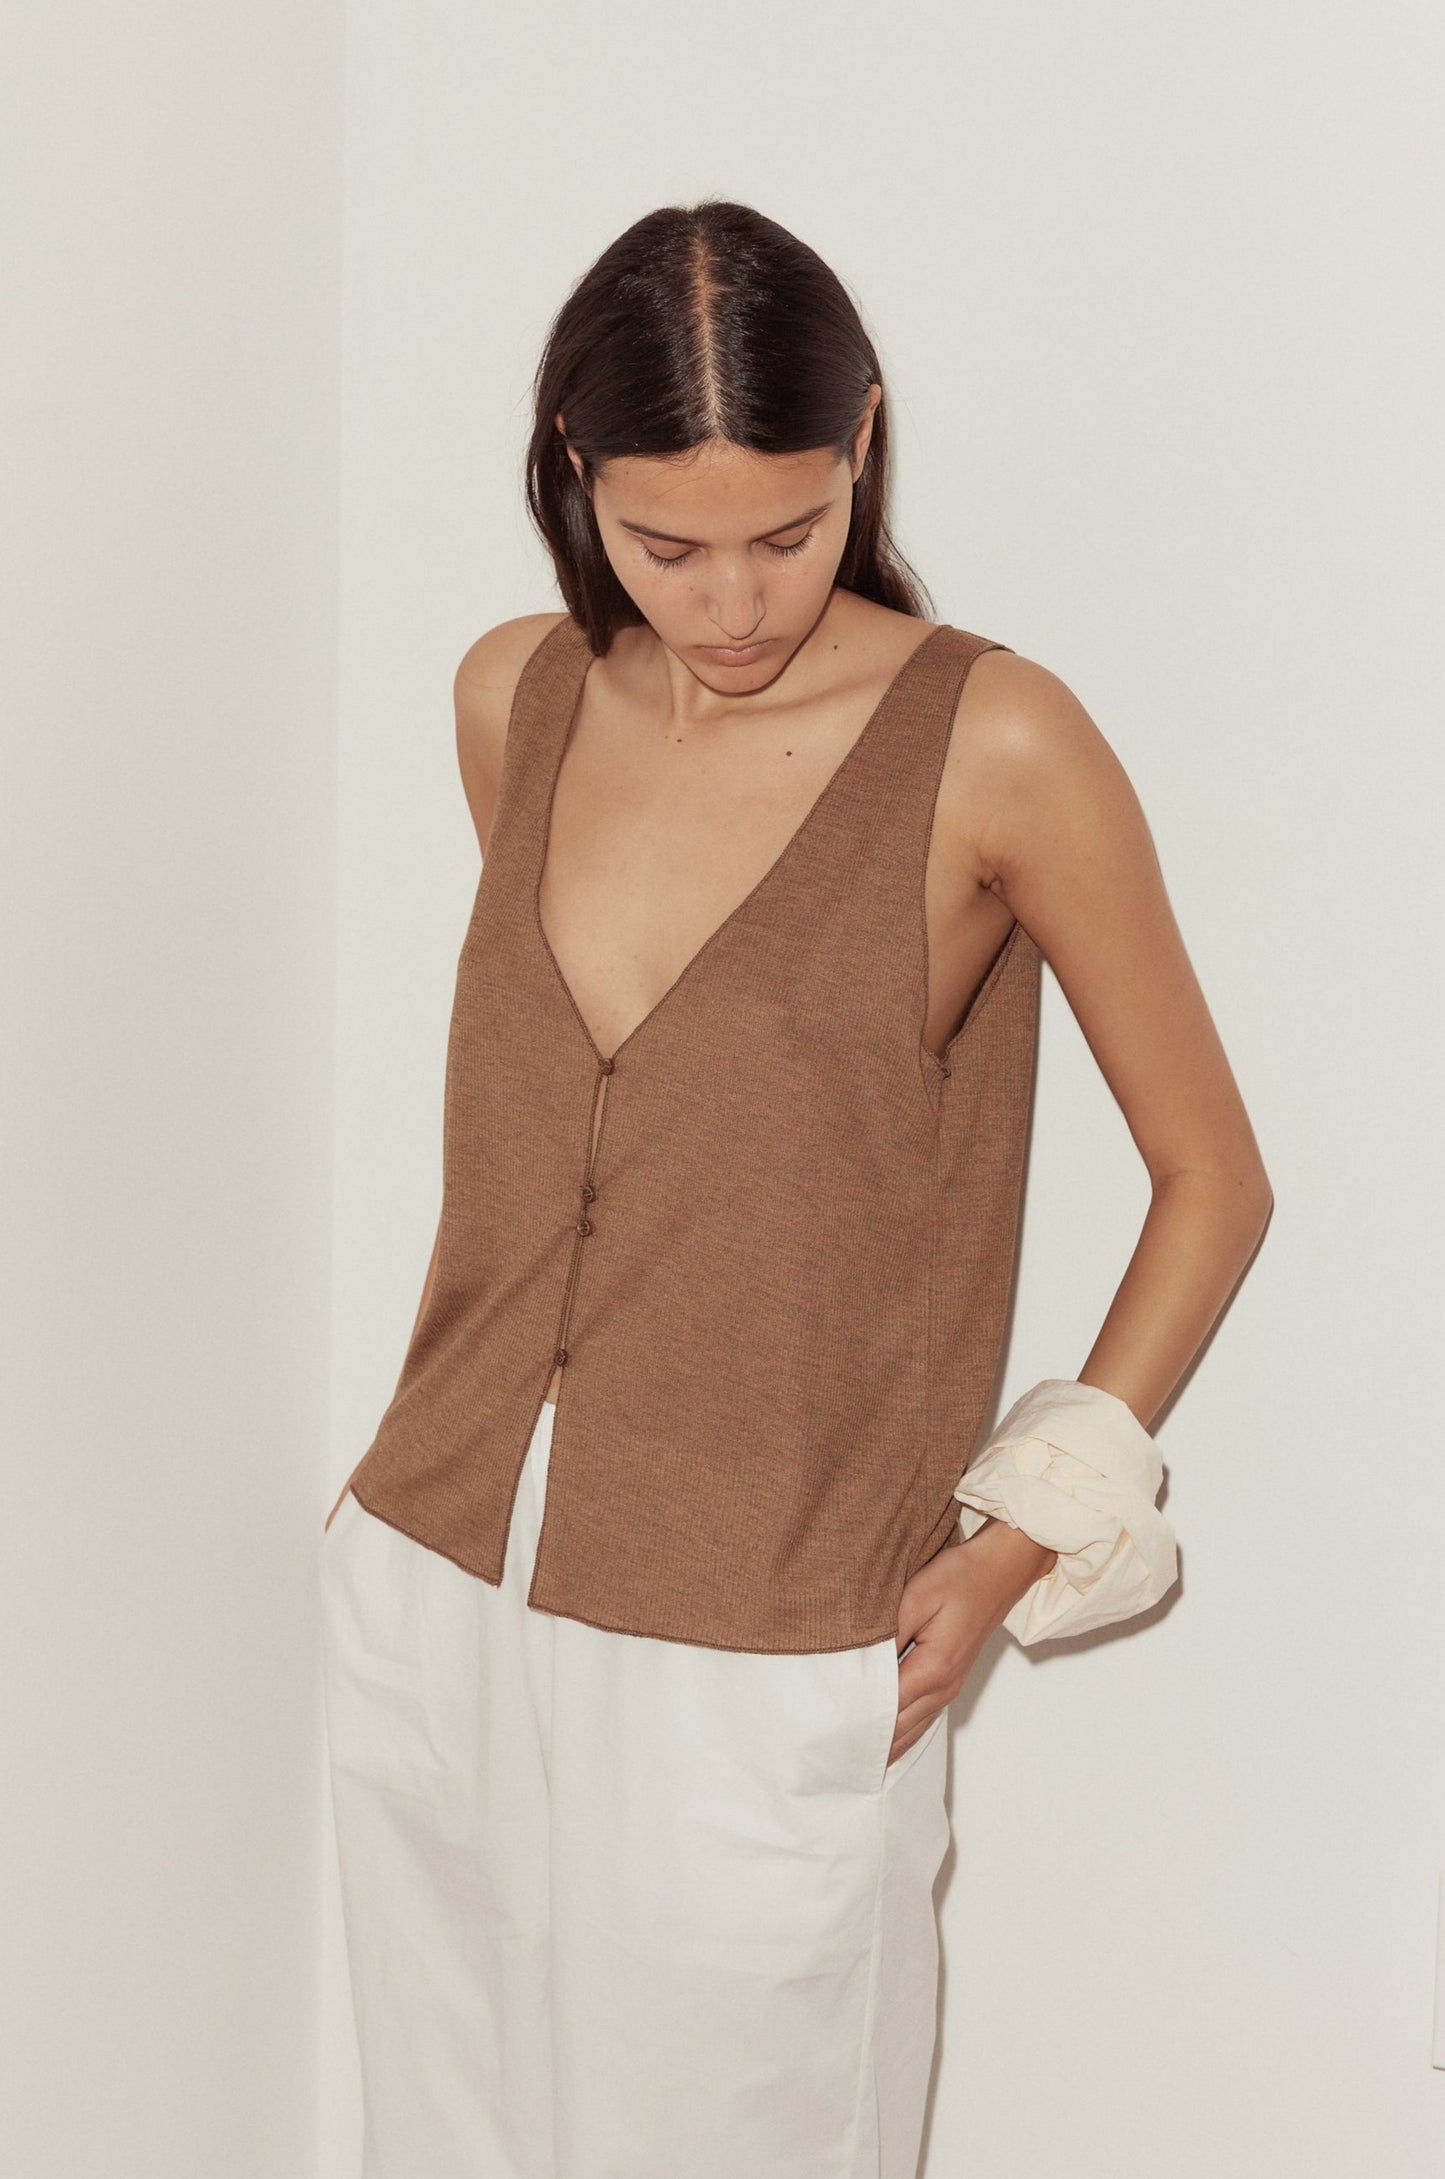 Female model wearing Button Up Knit Tank - Coffee by Deiji Studios against plain background